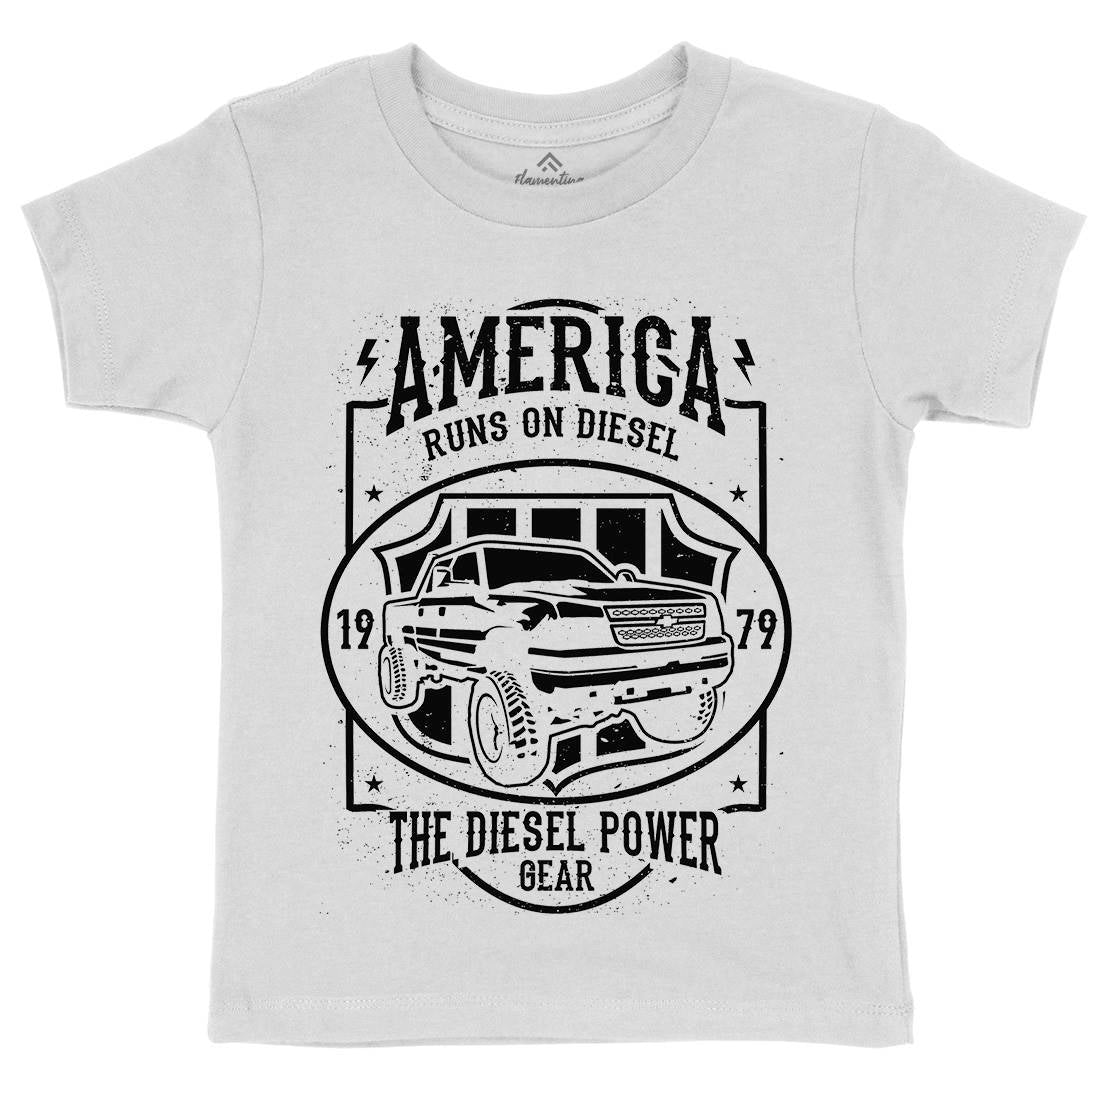 Runs On Diesel Kids Crew Neck T-Shirt Cars A131